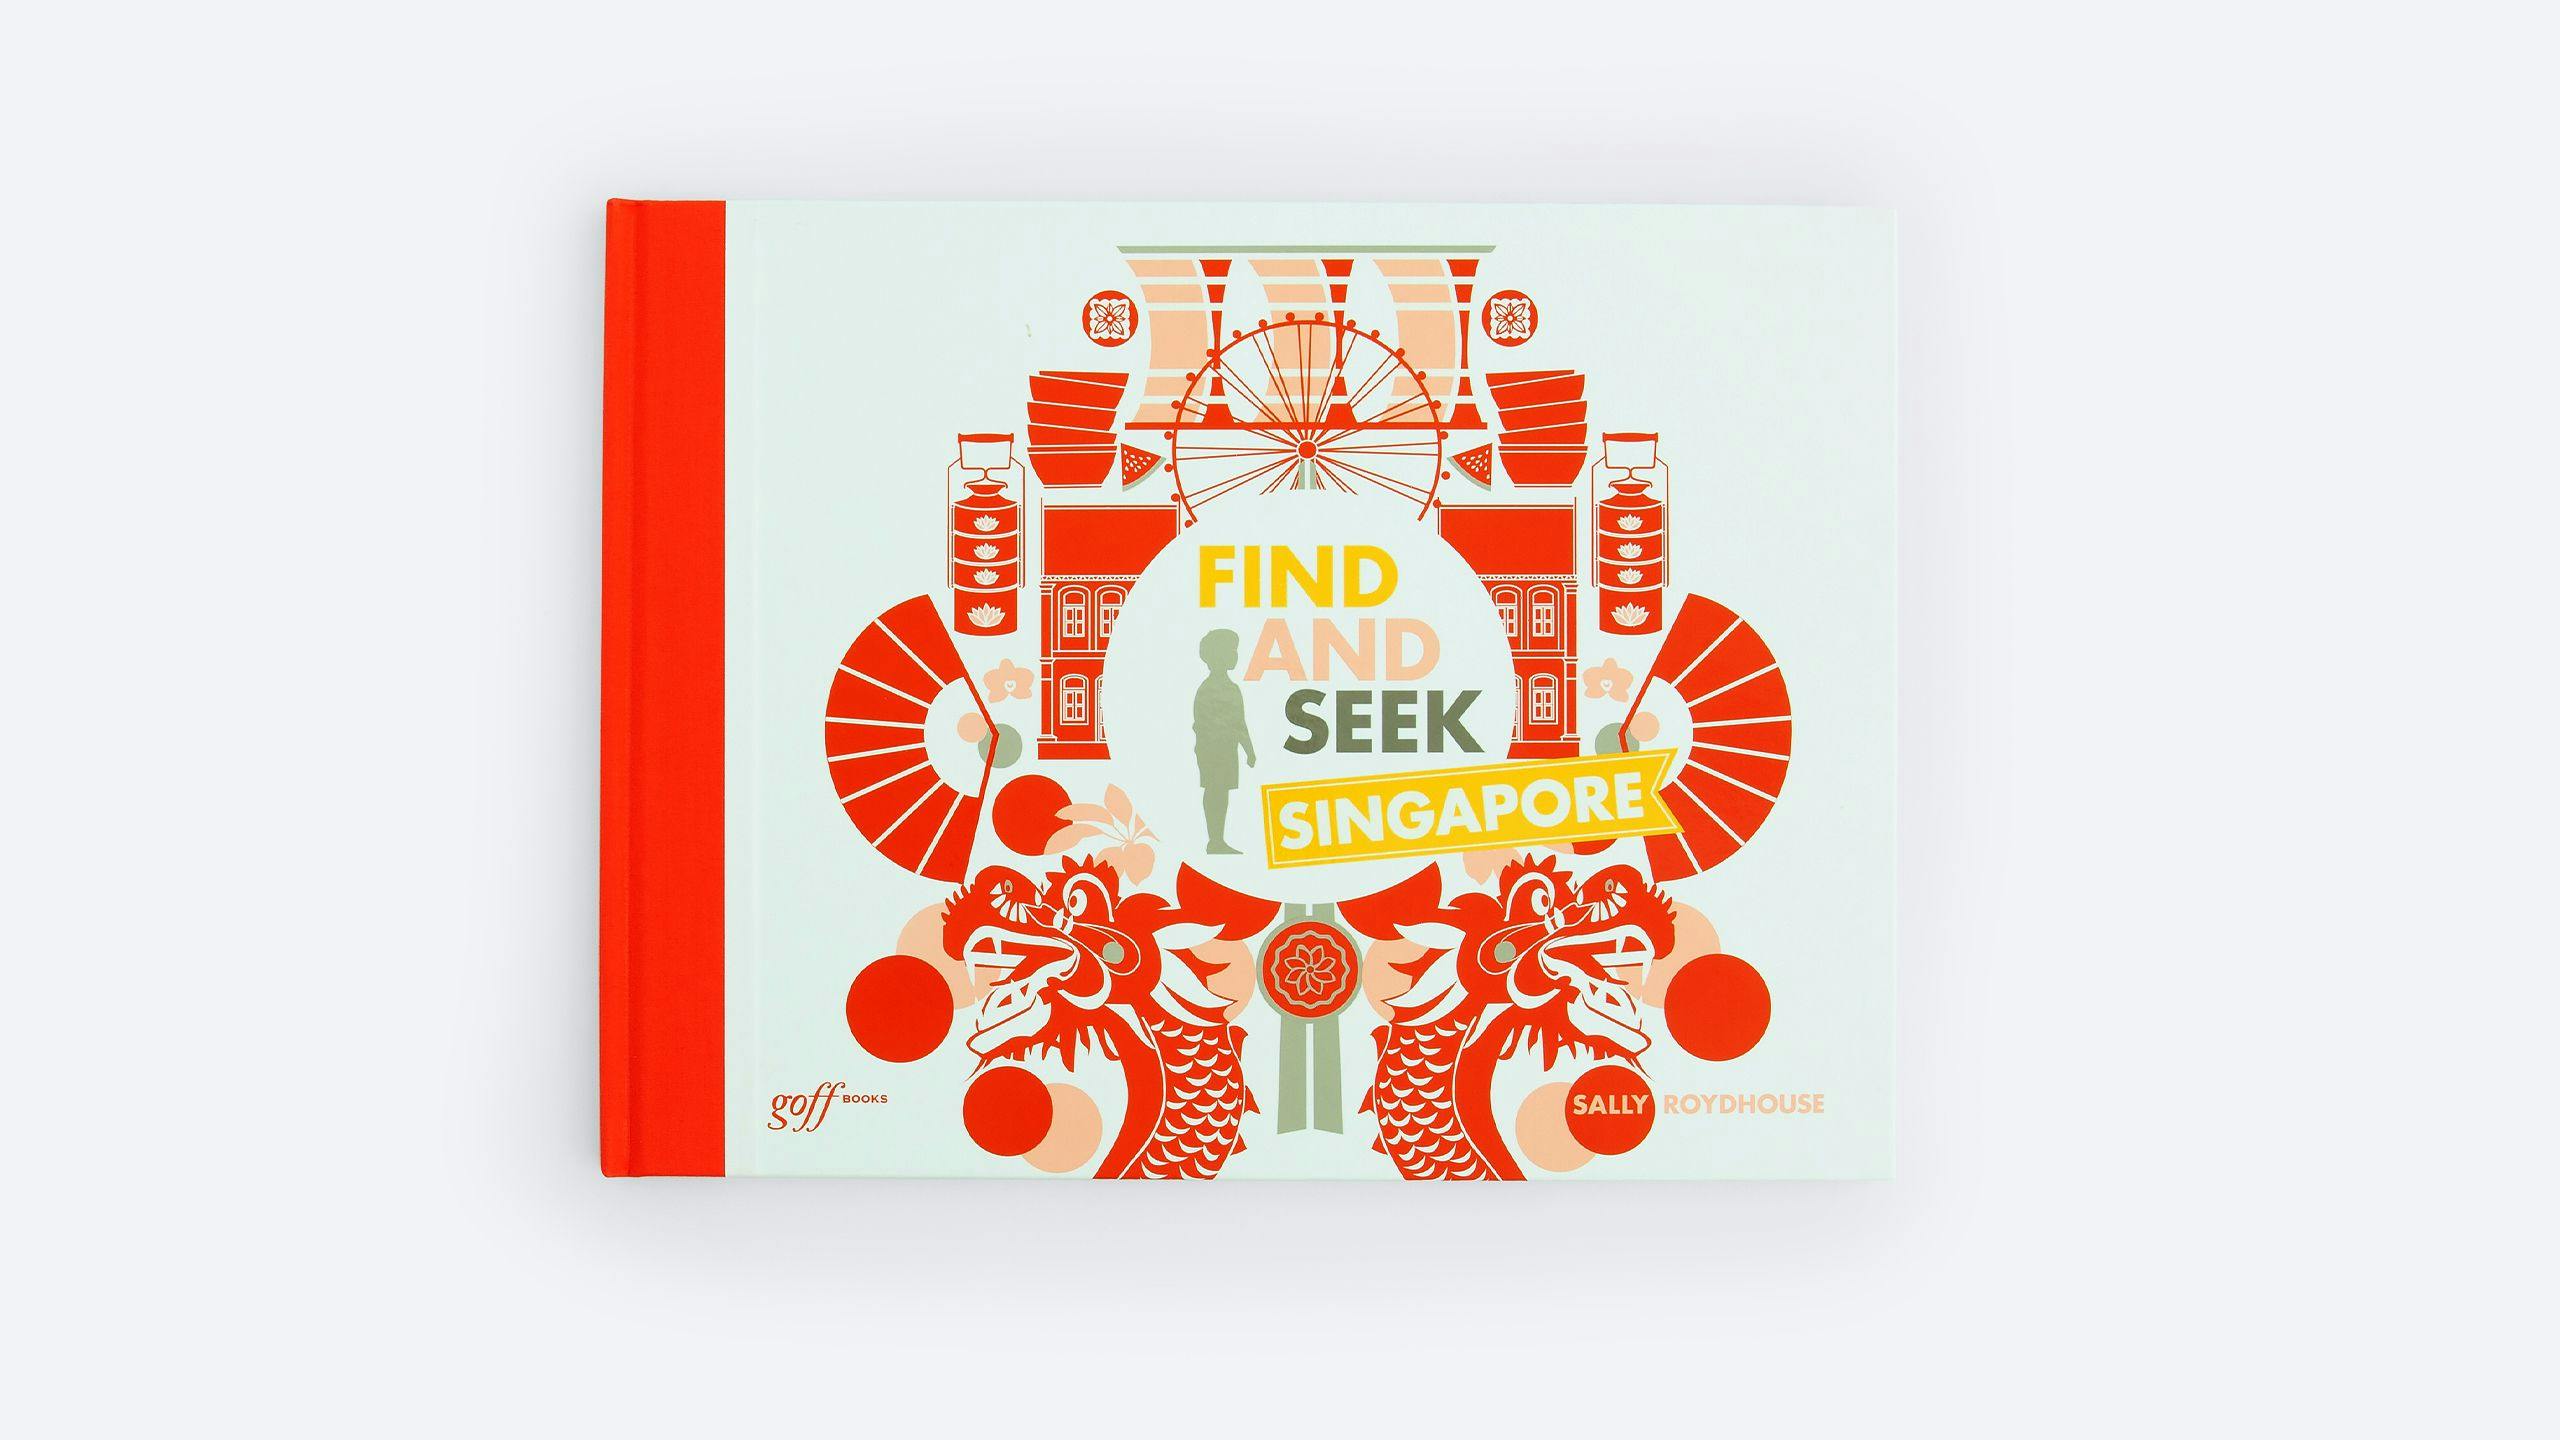 Find and seek